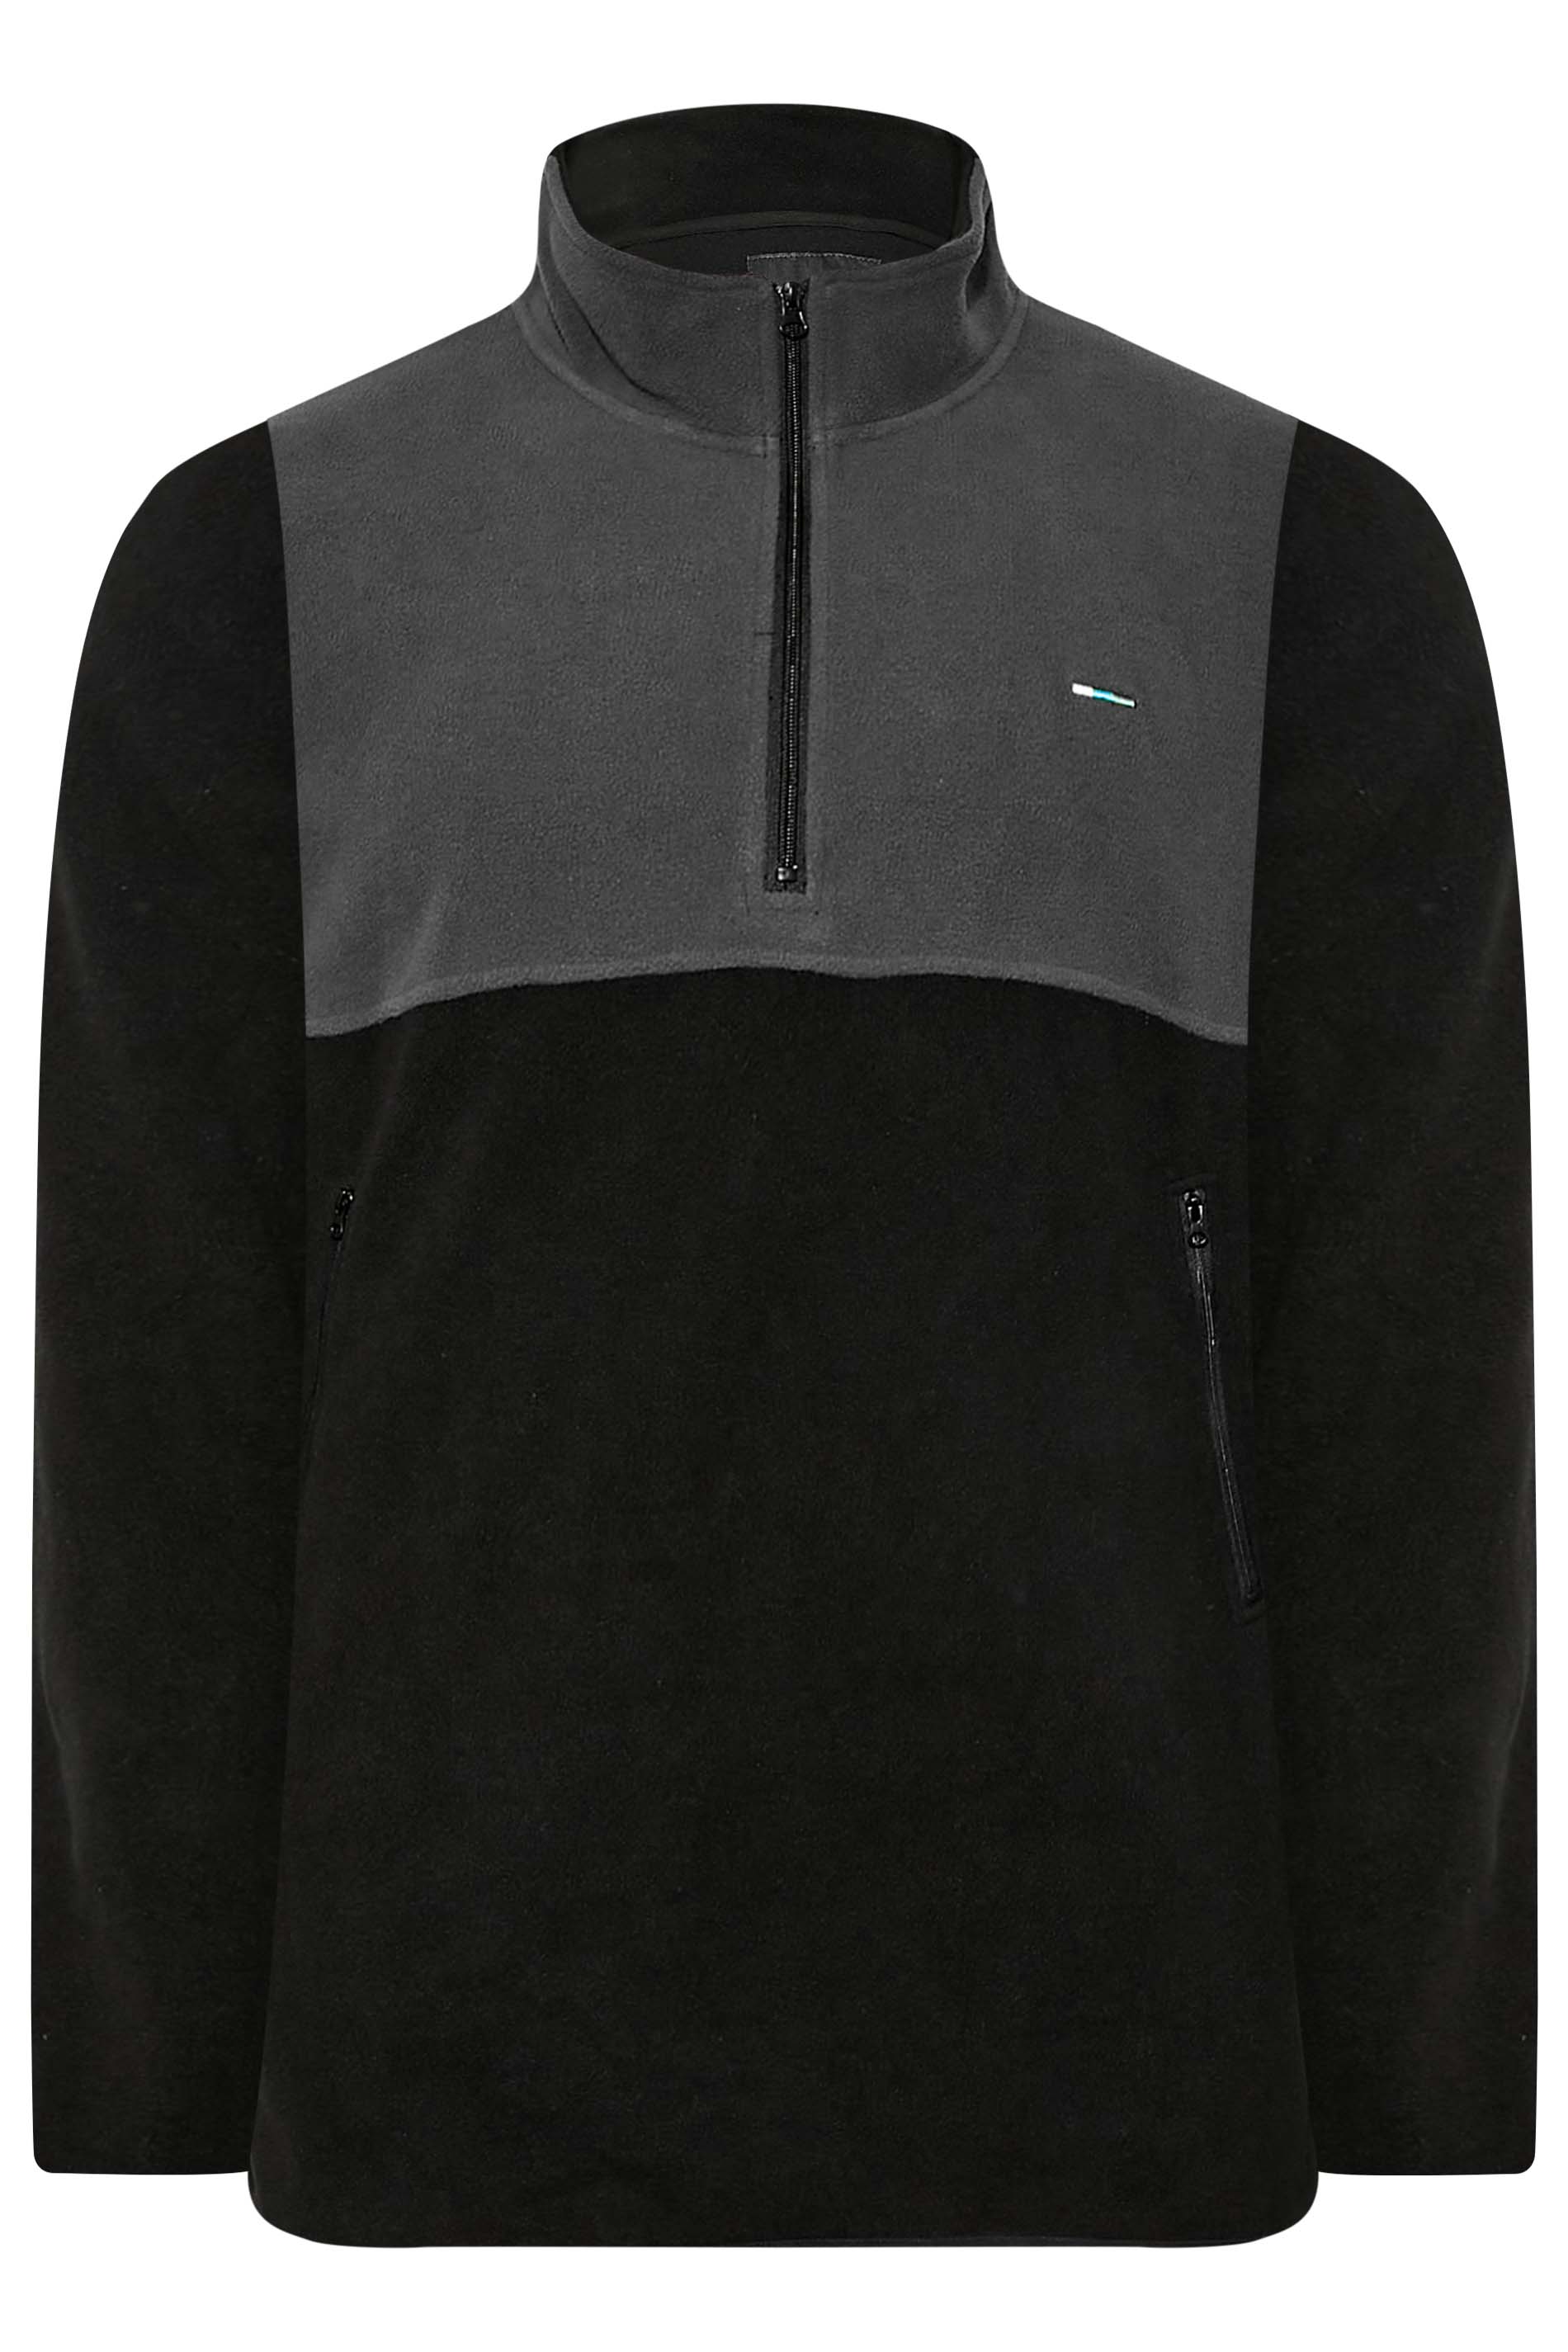 BadRhino big & Tall Black & Grey Quarter Zip Fleece Sweatshirt 1